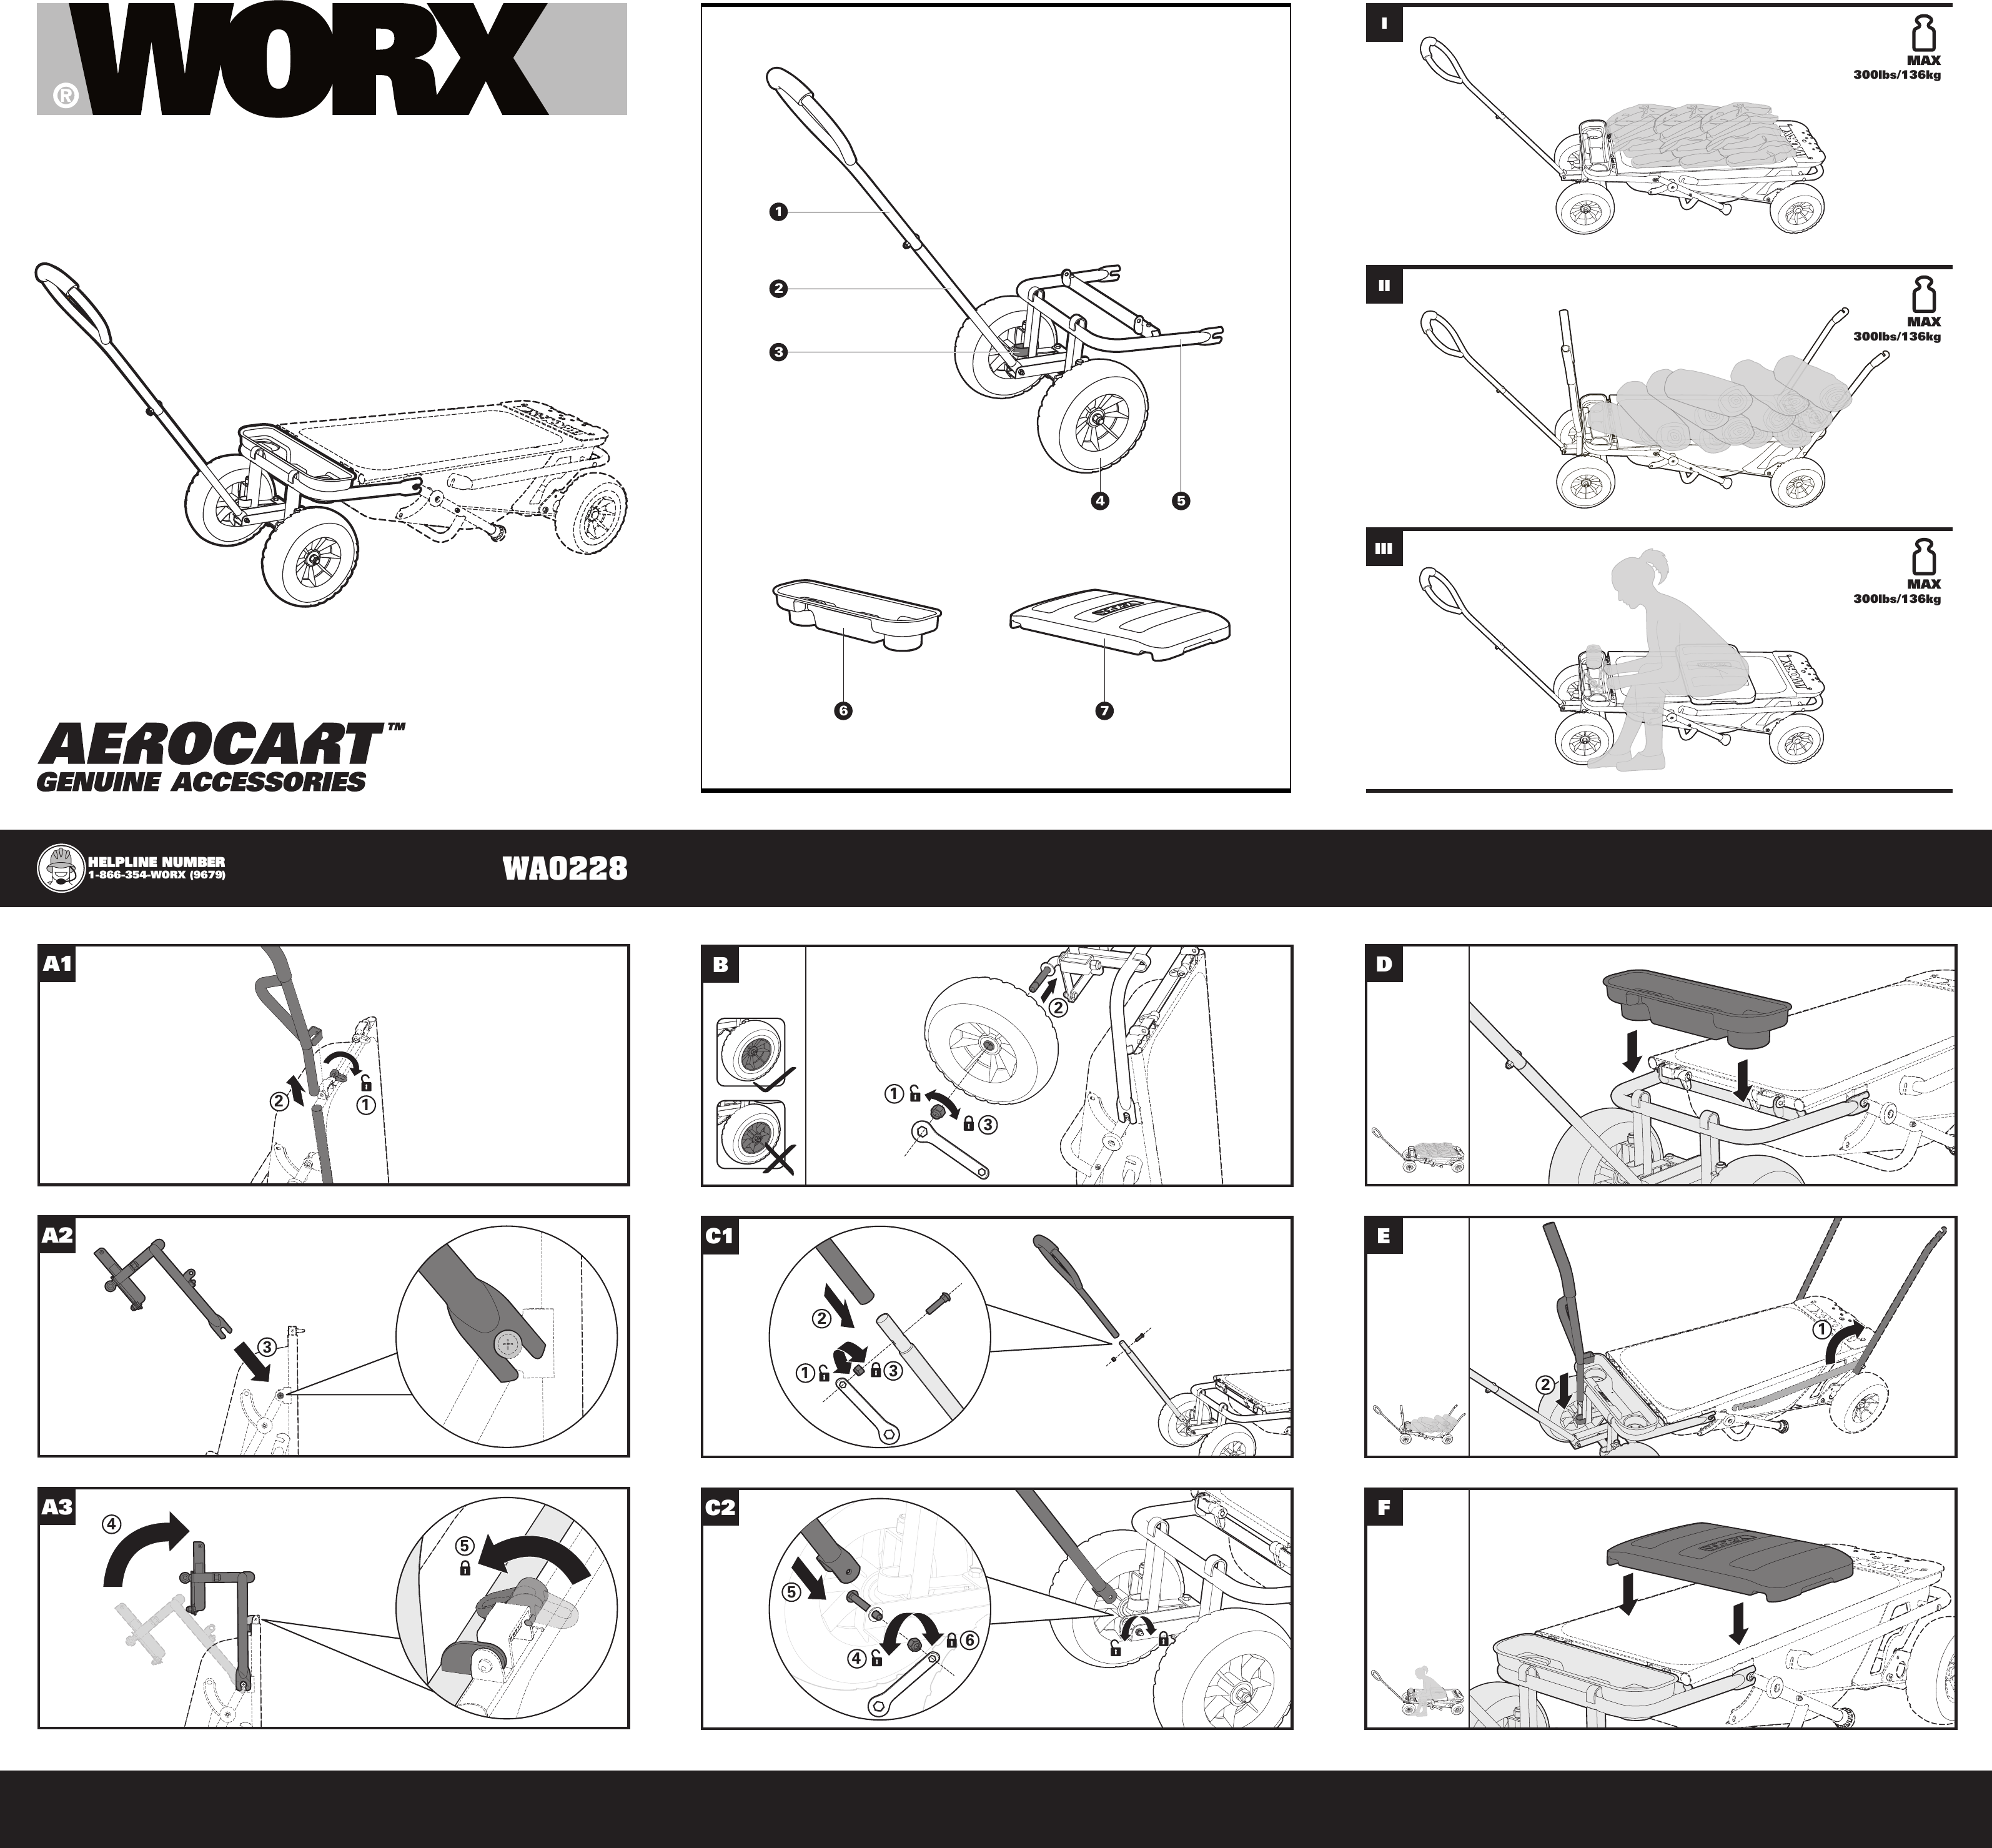 Page 1 of 2 - Worx-Tools Worx-Tools-Aerocart-Wagon-Wa0228-Users-Manual-  Worx-tools-aerocart-wagon-wa0228-users-manual